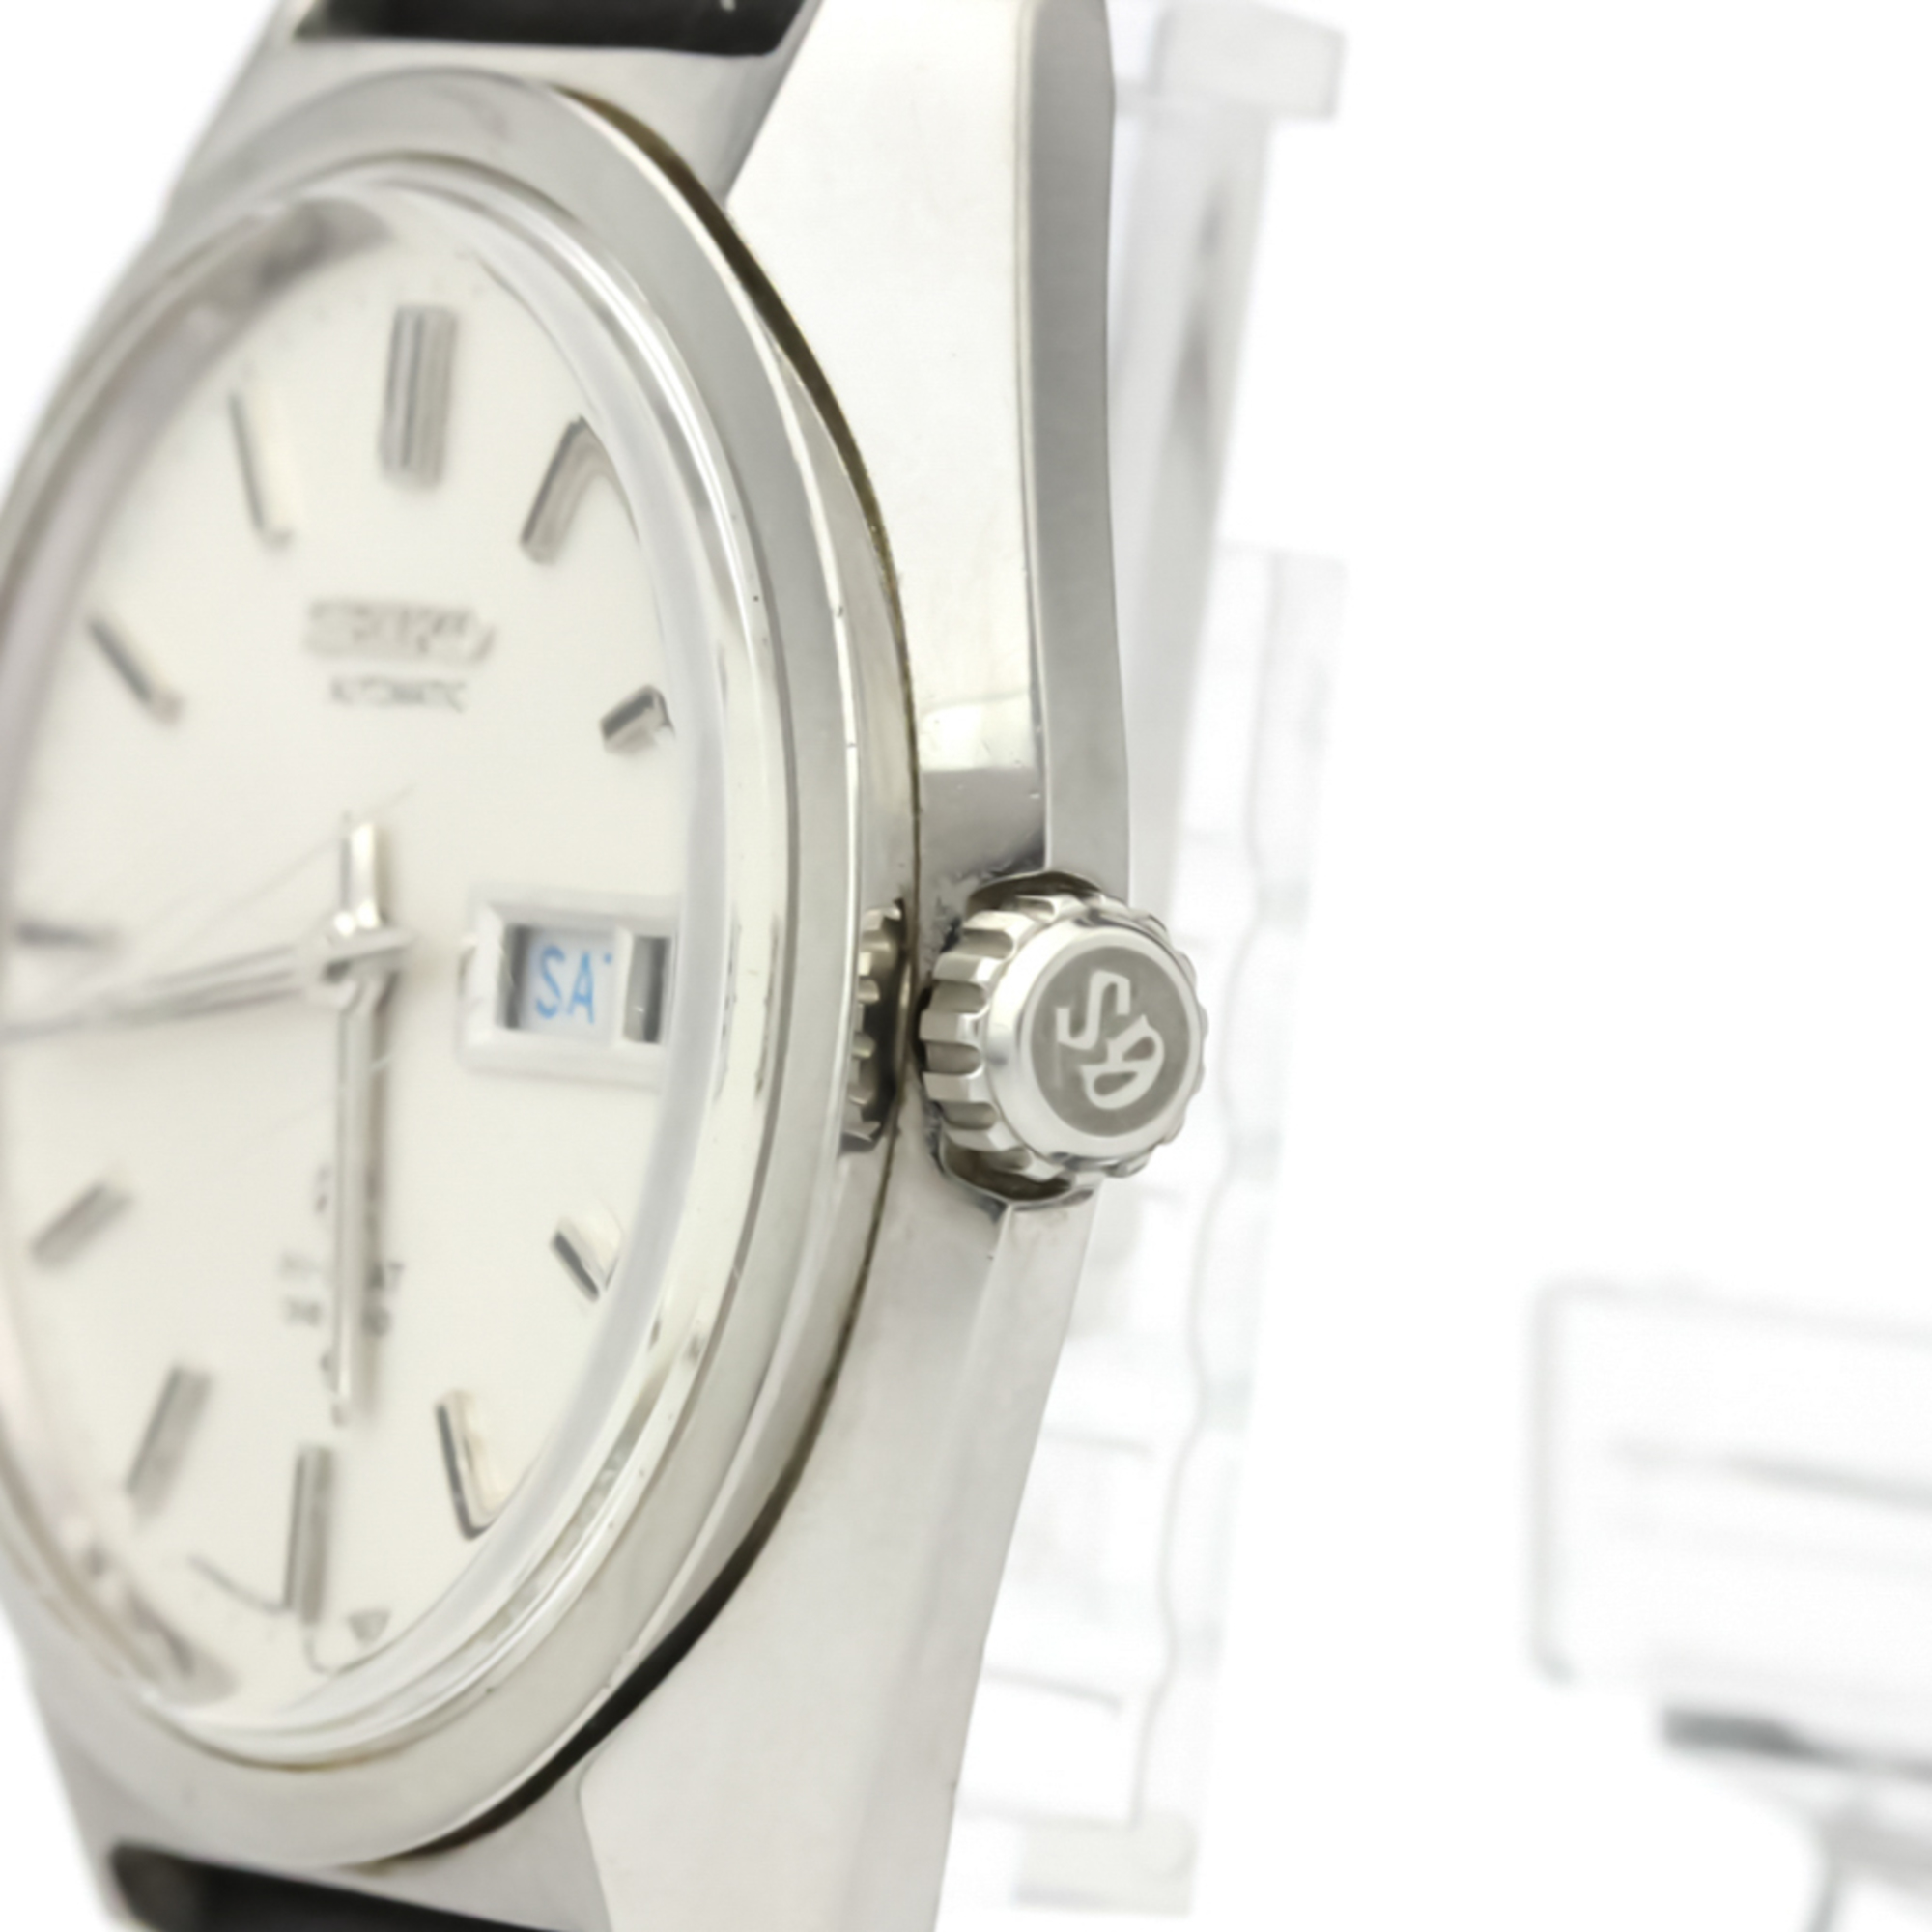 Seiko Grand Seiko Automatic Stainless Steel Men's Dress Watch 6146-8000